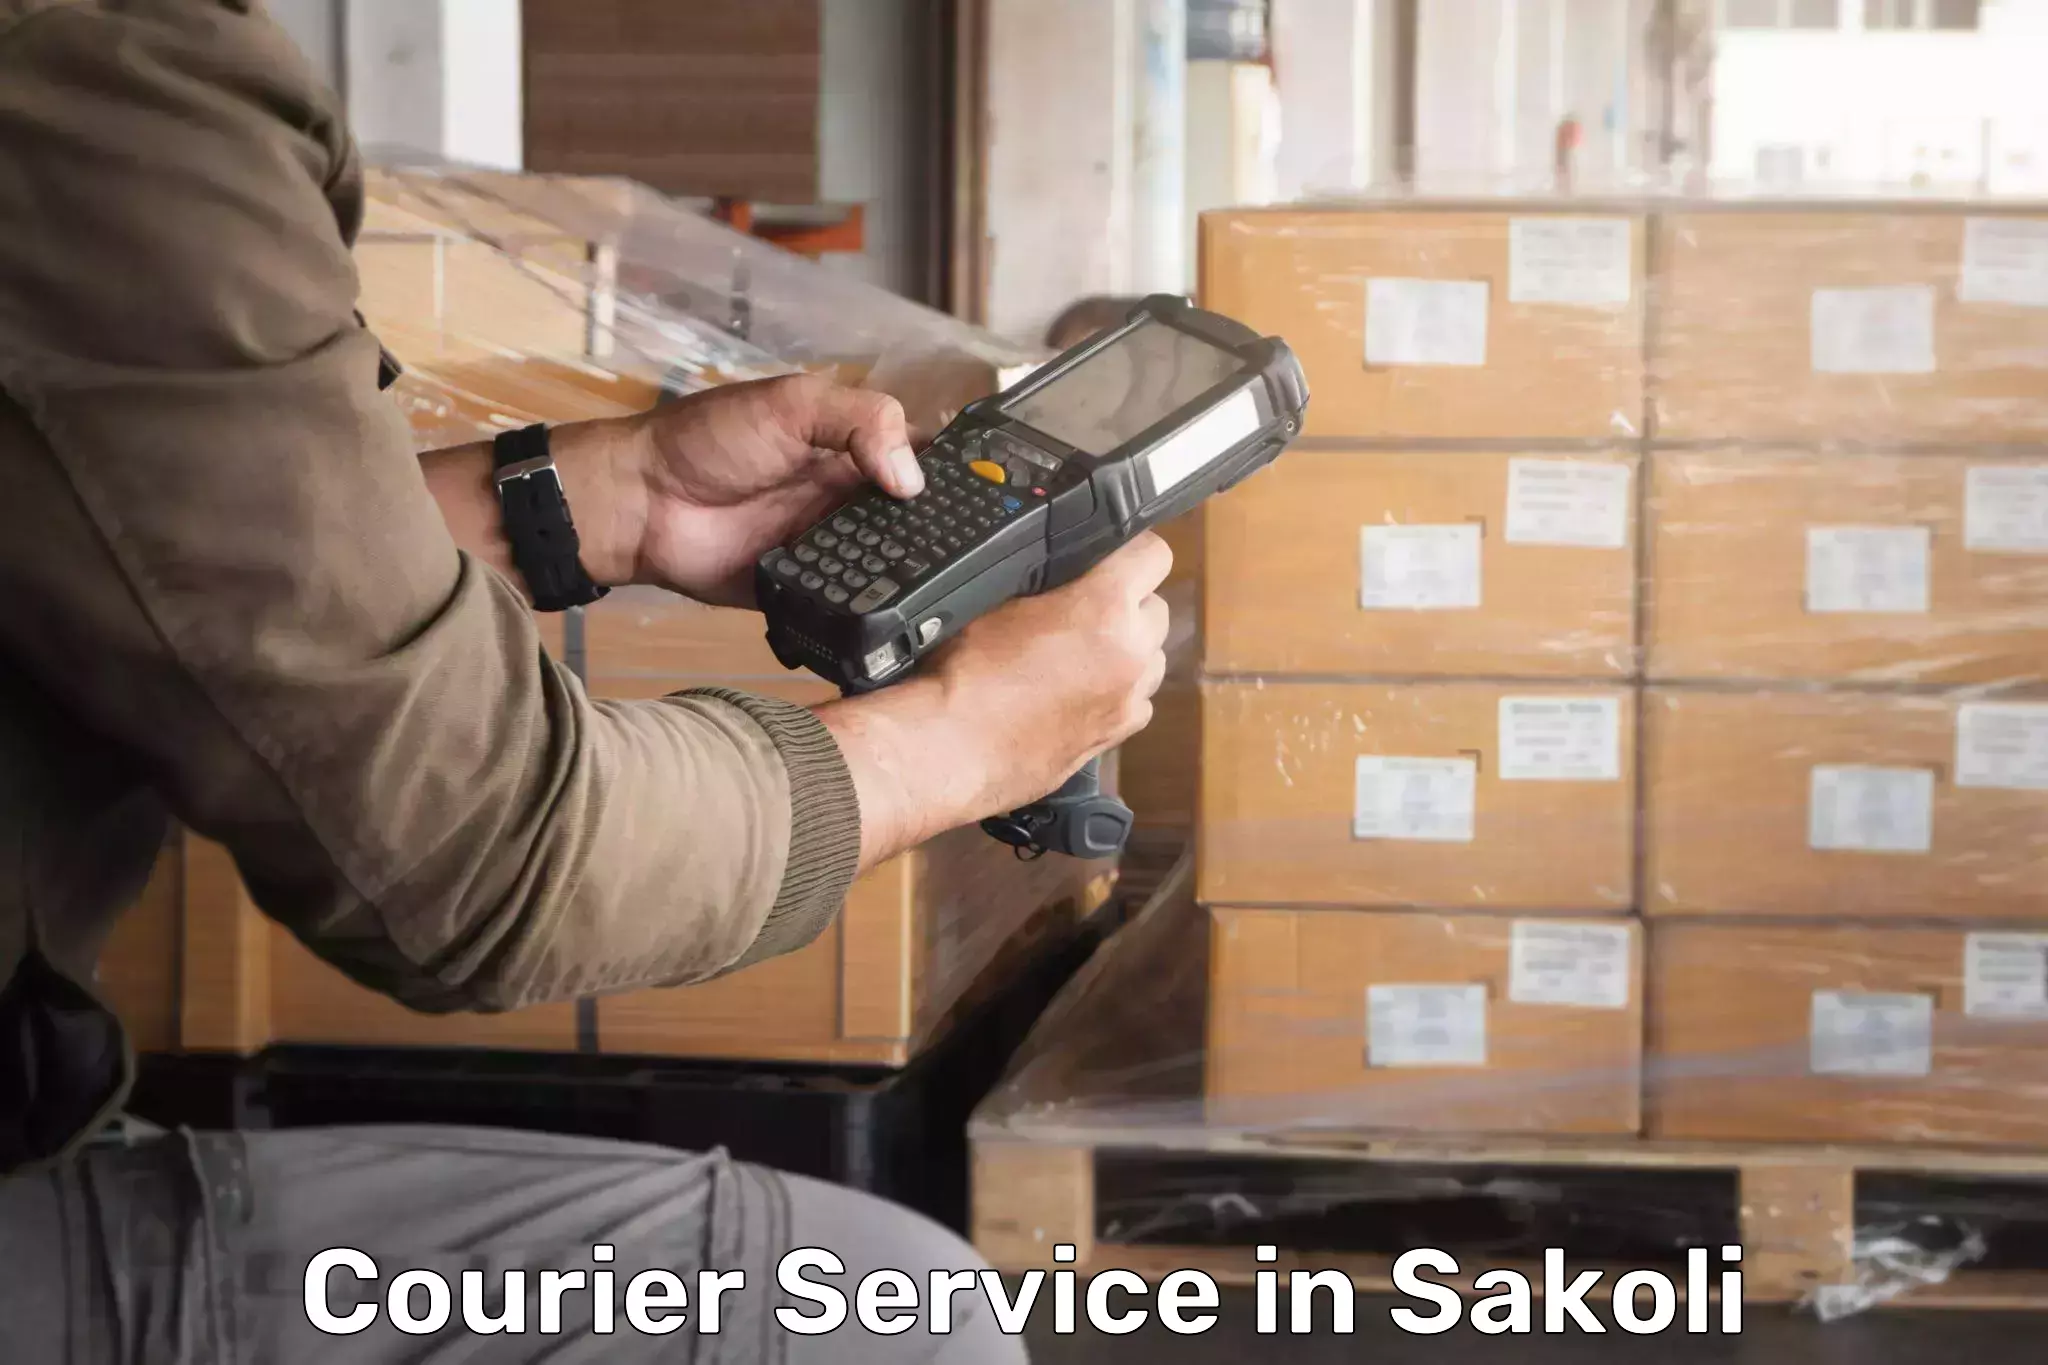 Efficient freight service in Sakoli